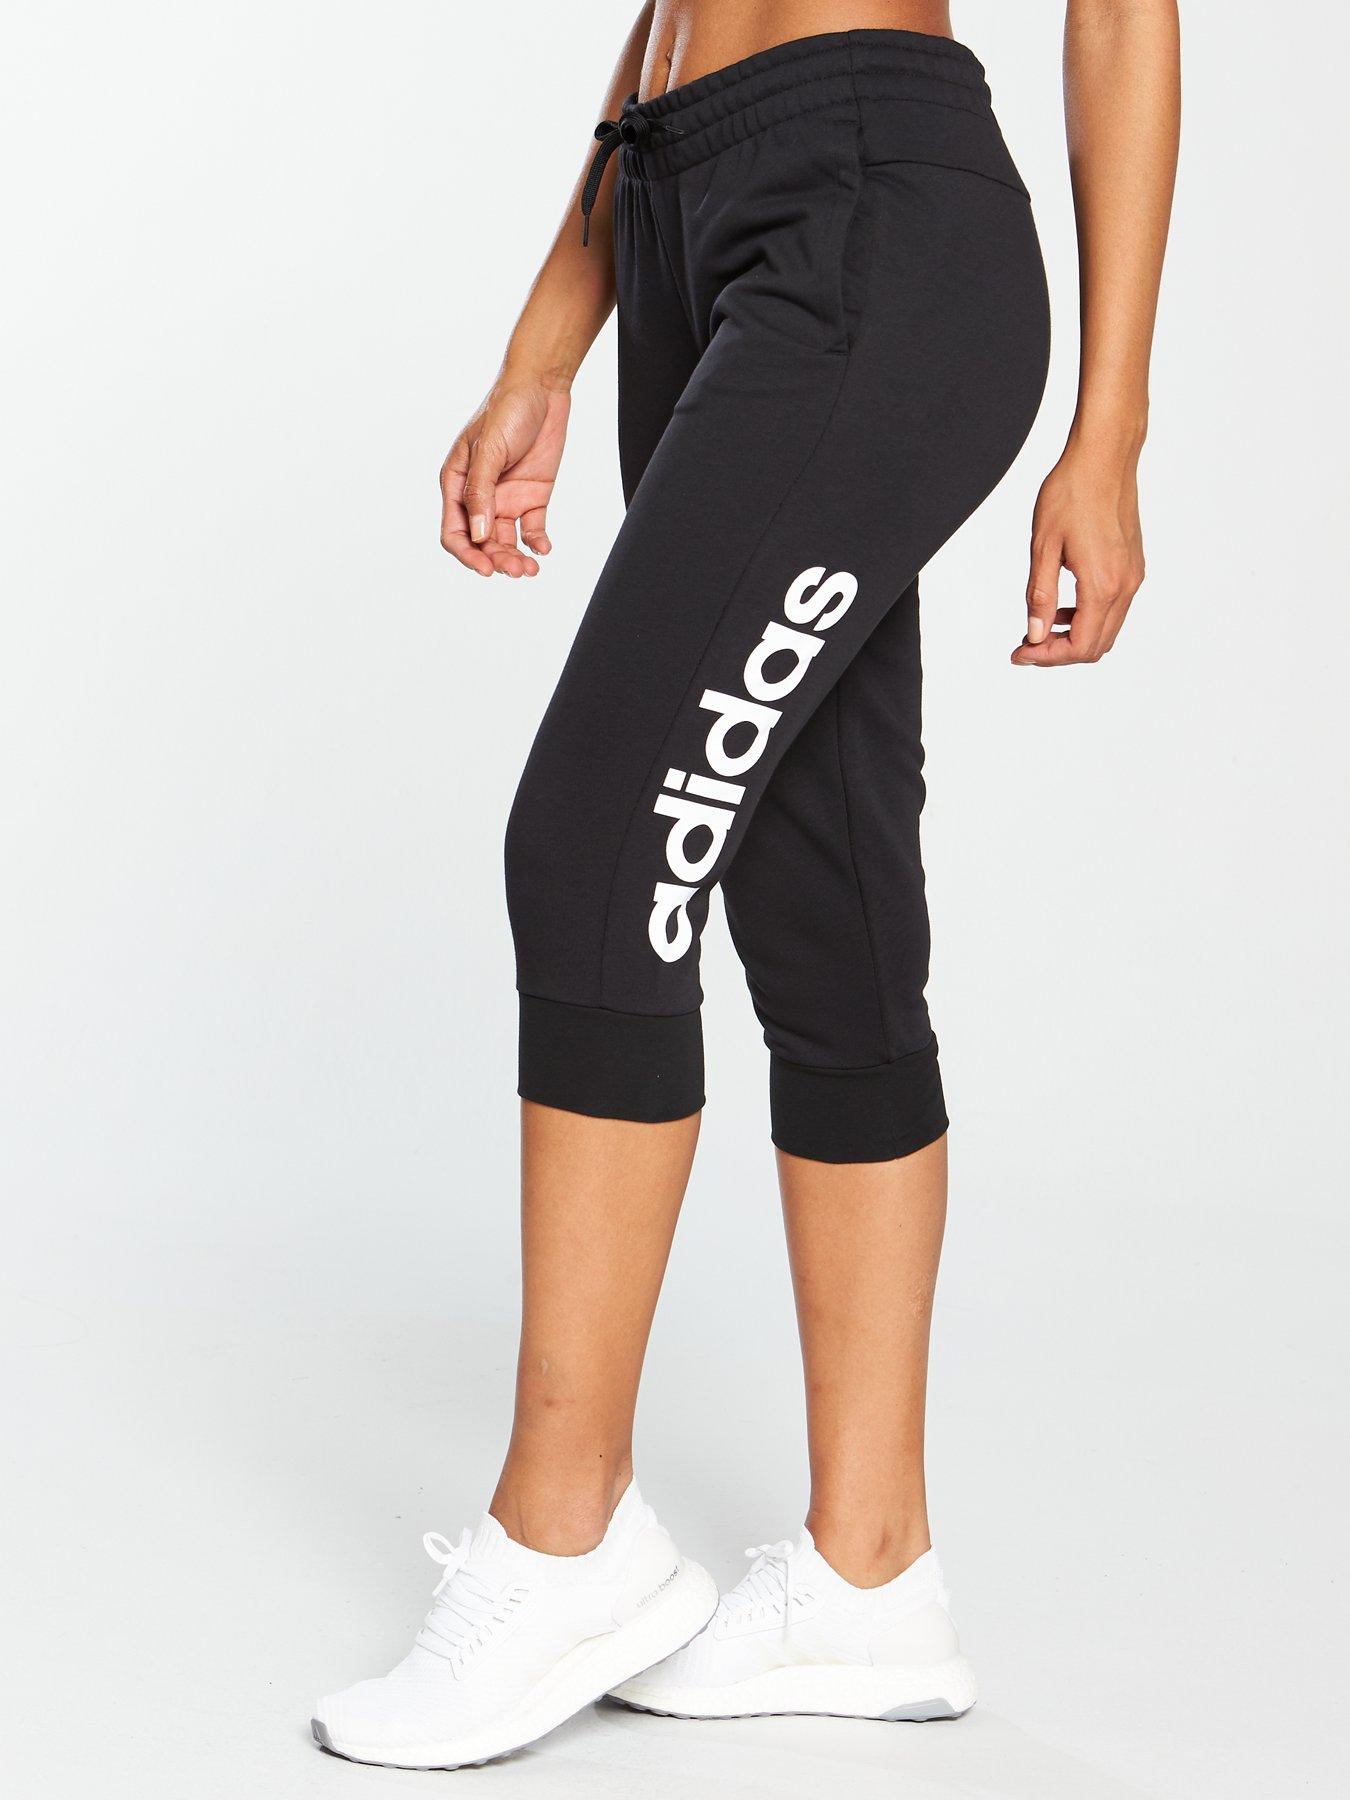 adidas jogging pants ladies